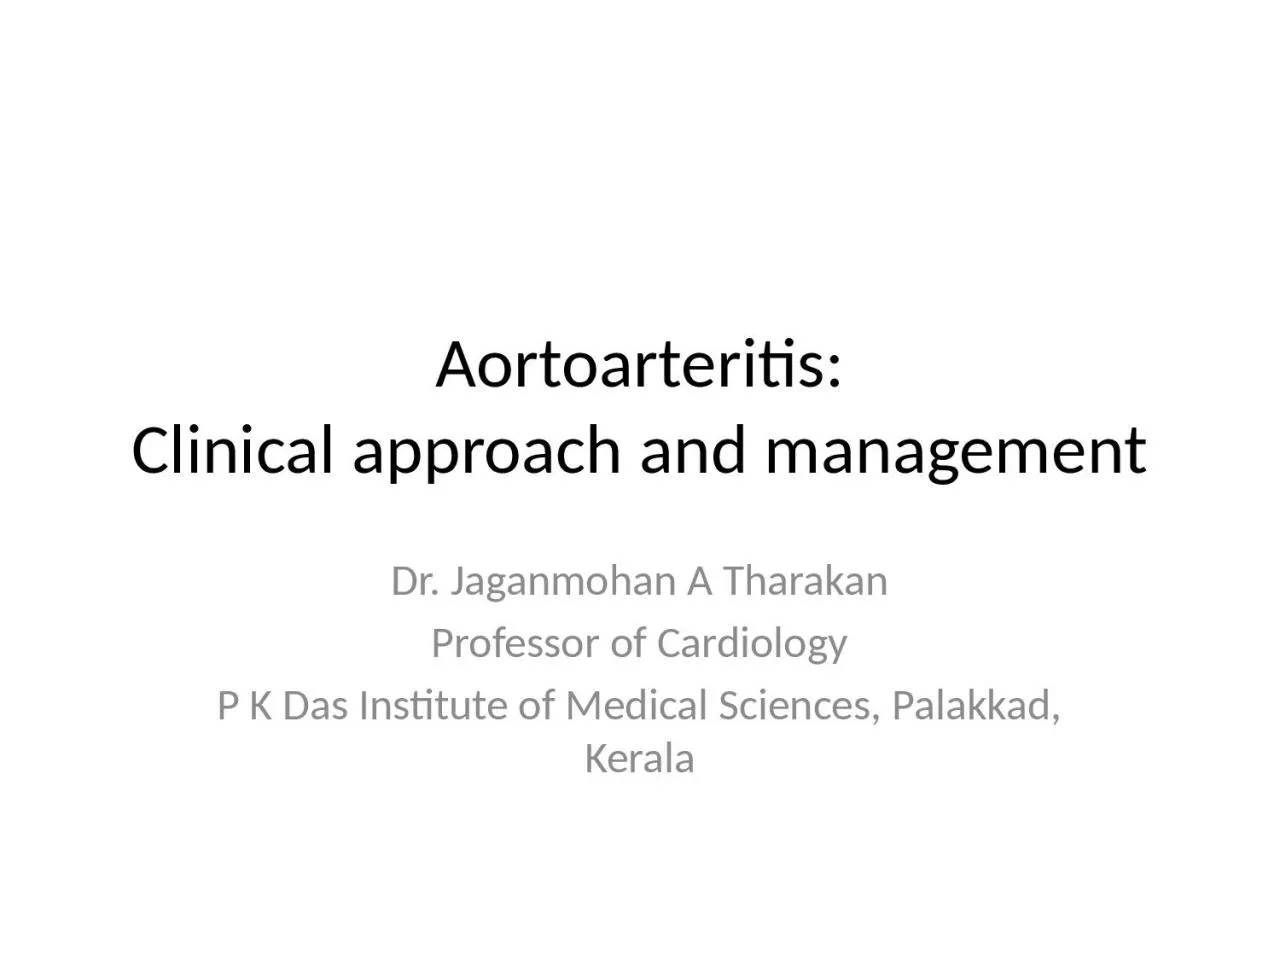 Aortoarteritis : Clinical approach and management